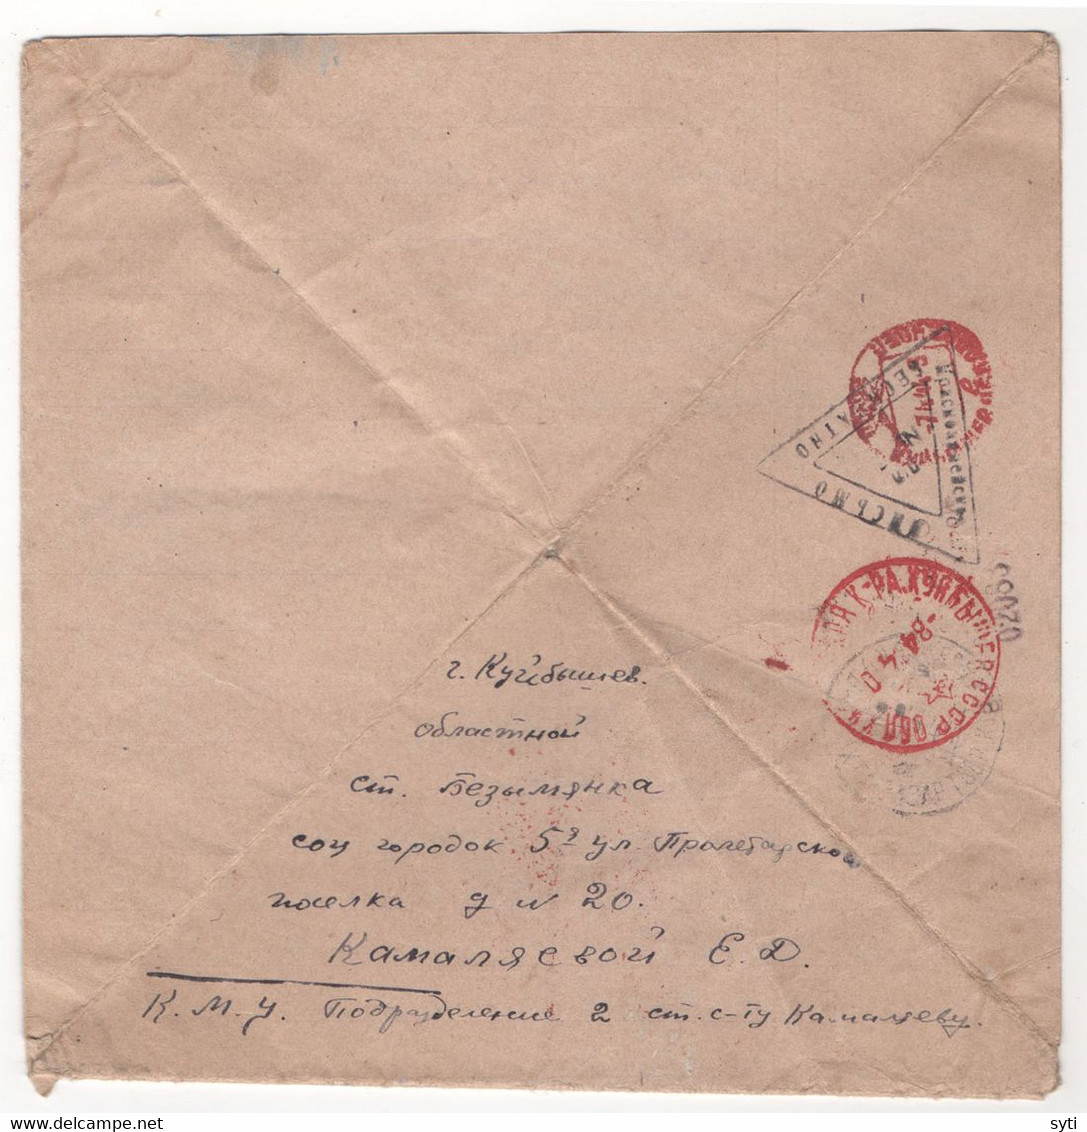 Russia 1943 Asia Serhetabat Turkmenistan KUSHKA Afghanistan Border Military Letter To Kuibyshev Censorship 02088 - Covers & Documents